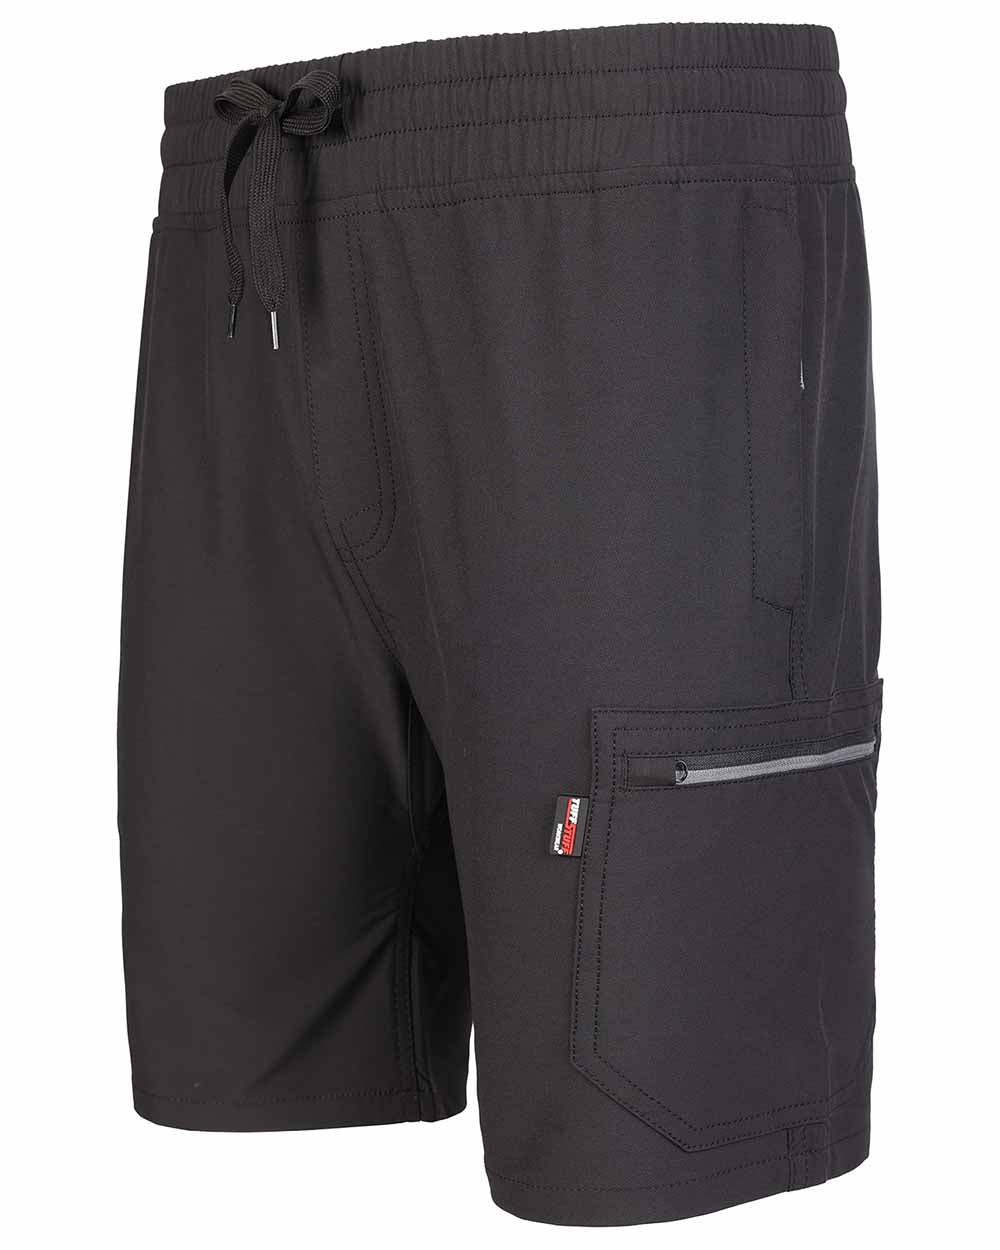 Black Coloured TuffStuff Hyperflex Shorts On A White Background